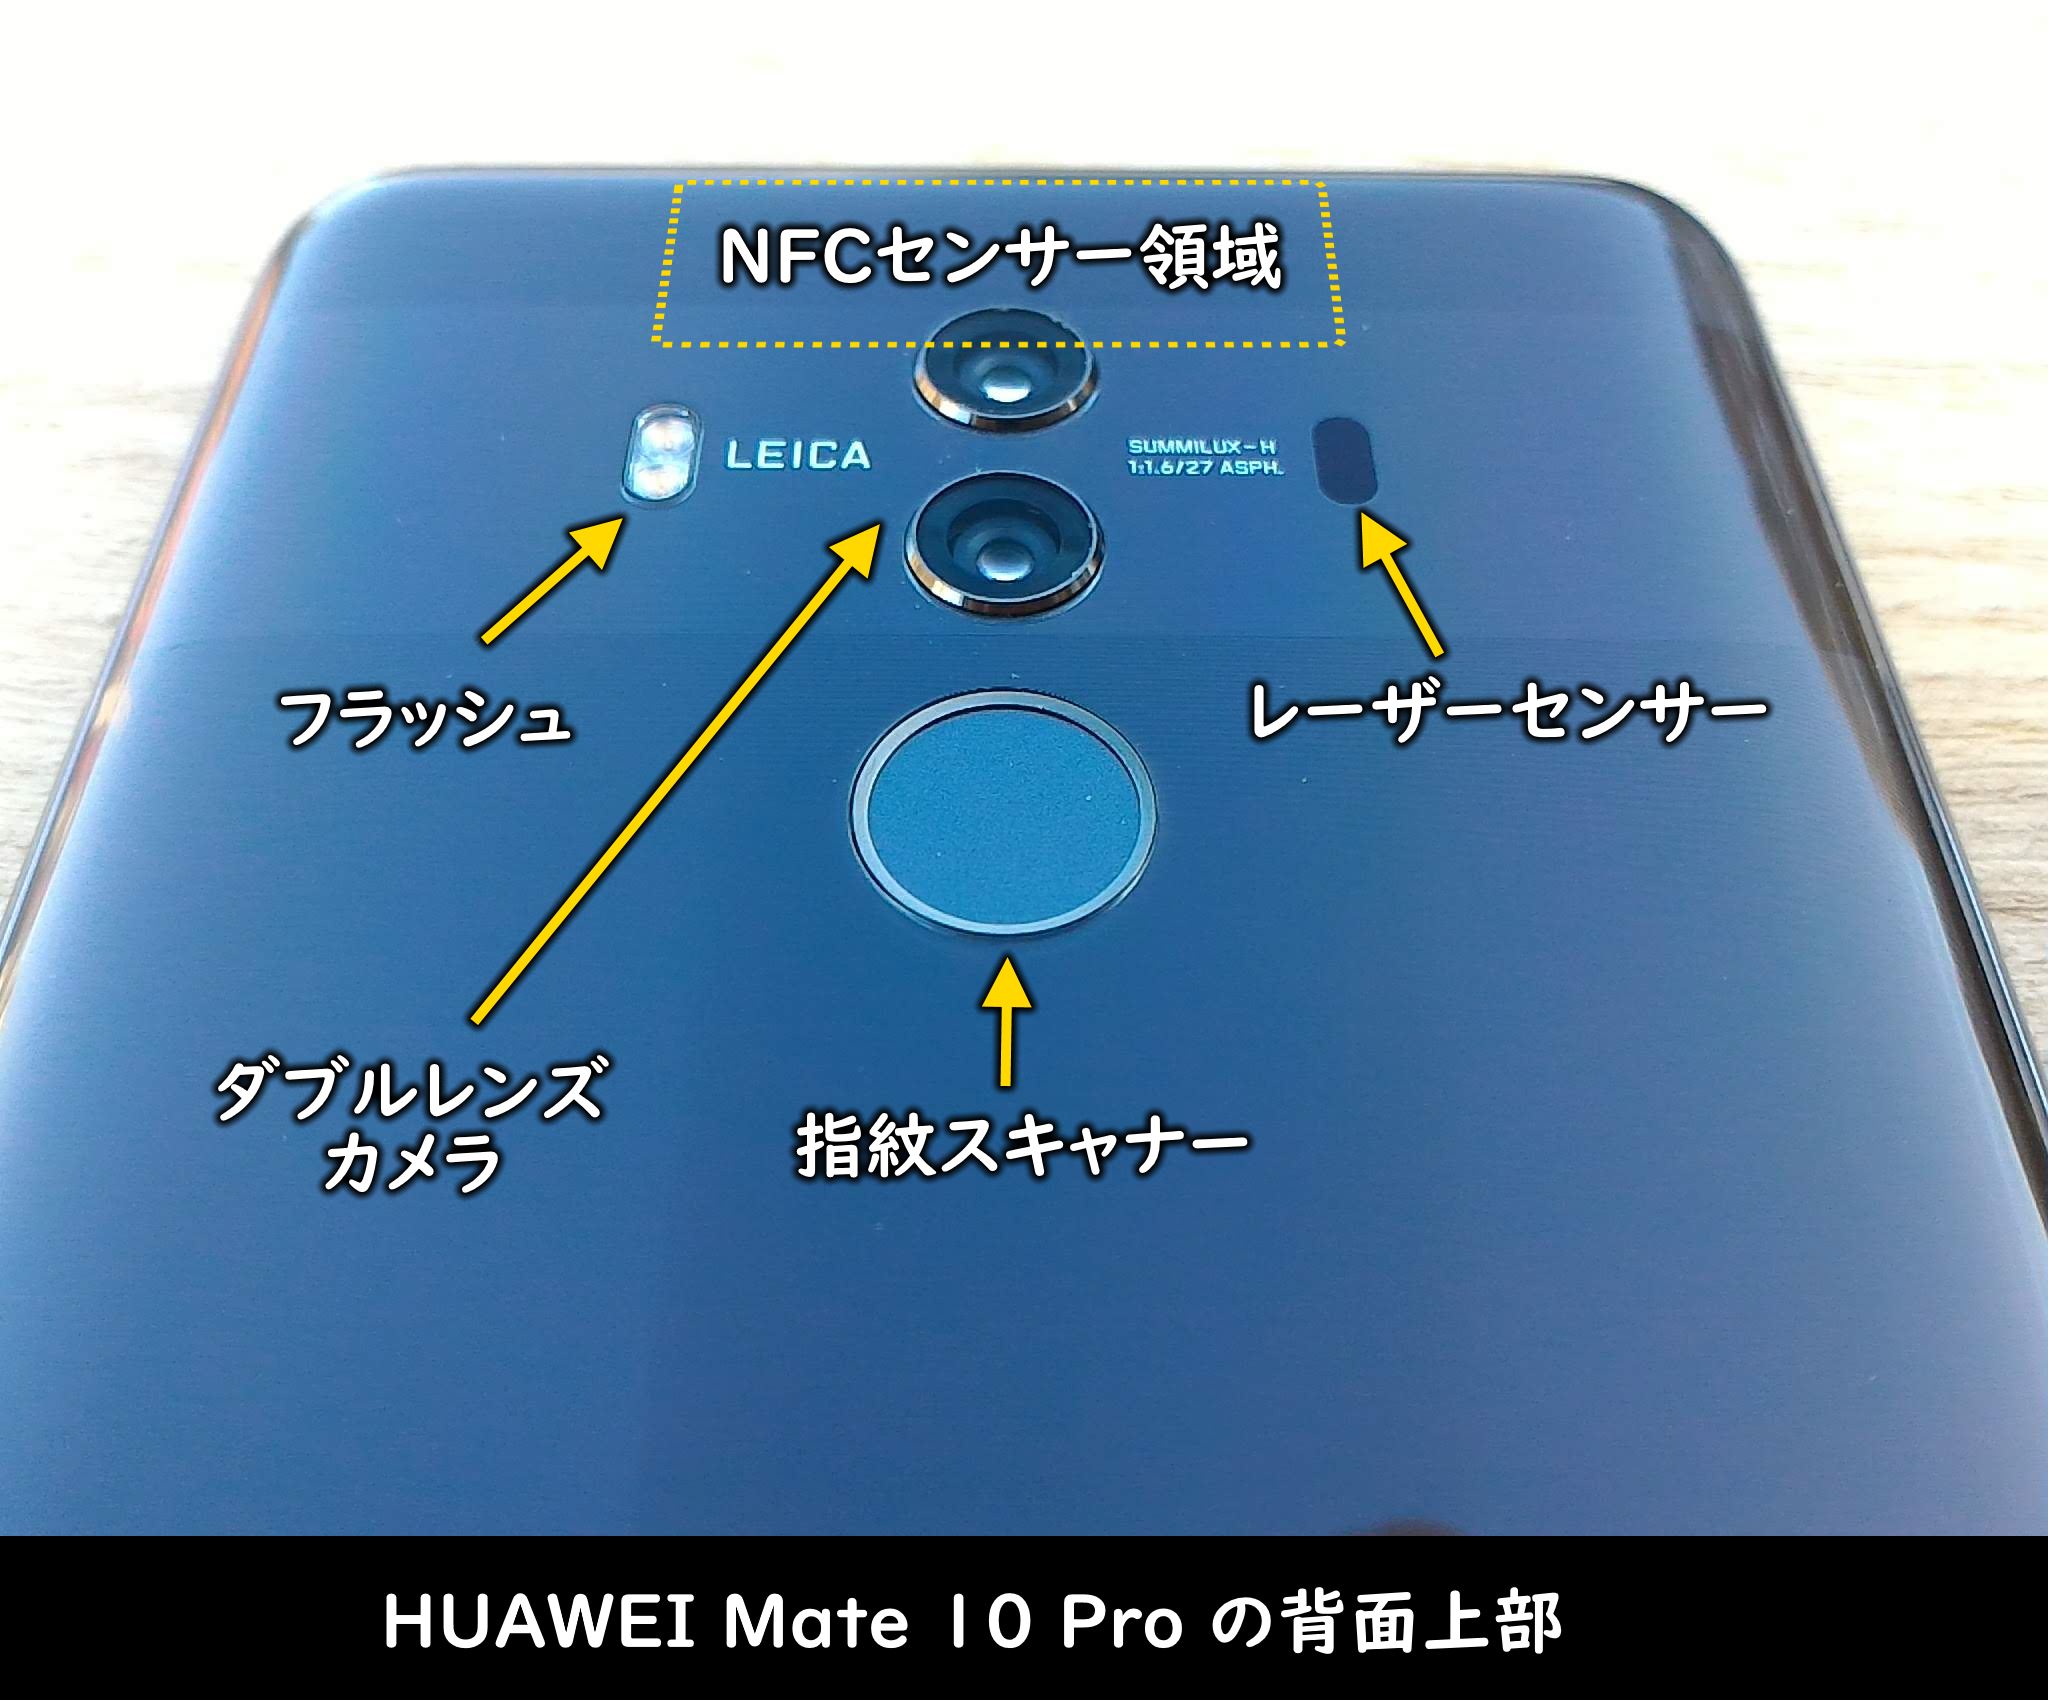 HUAWEI Mate 10 Pro の背面上部